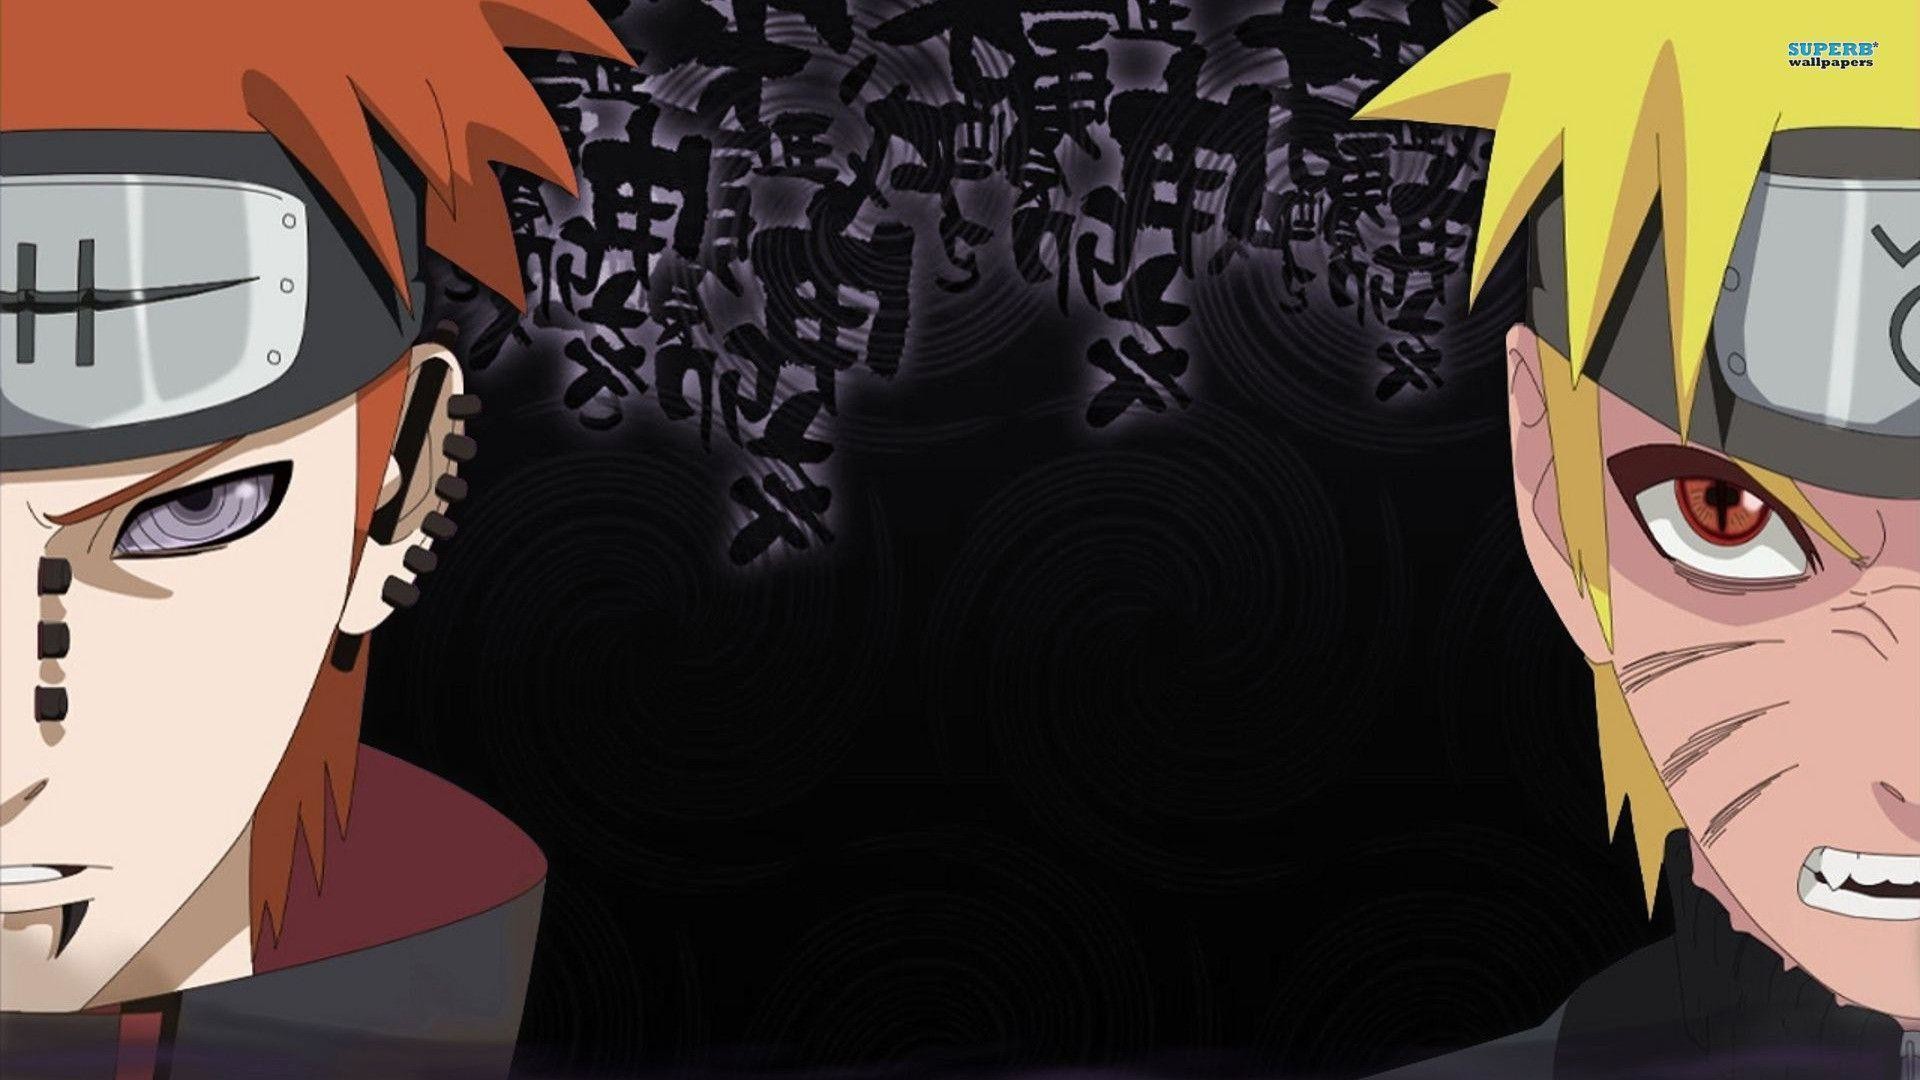 1920x1080 Naruto Uzumaki and Pain wallpaper - Anime wallpapers - #